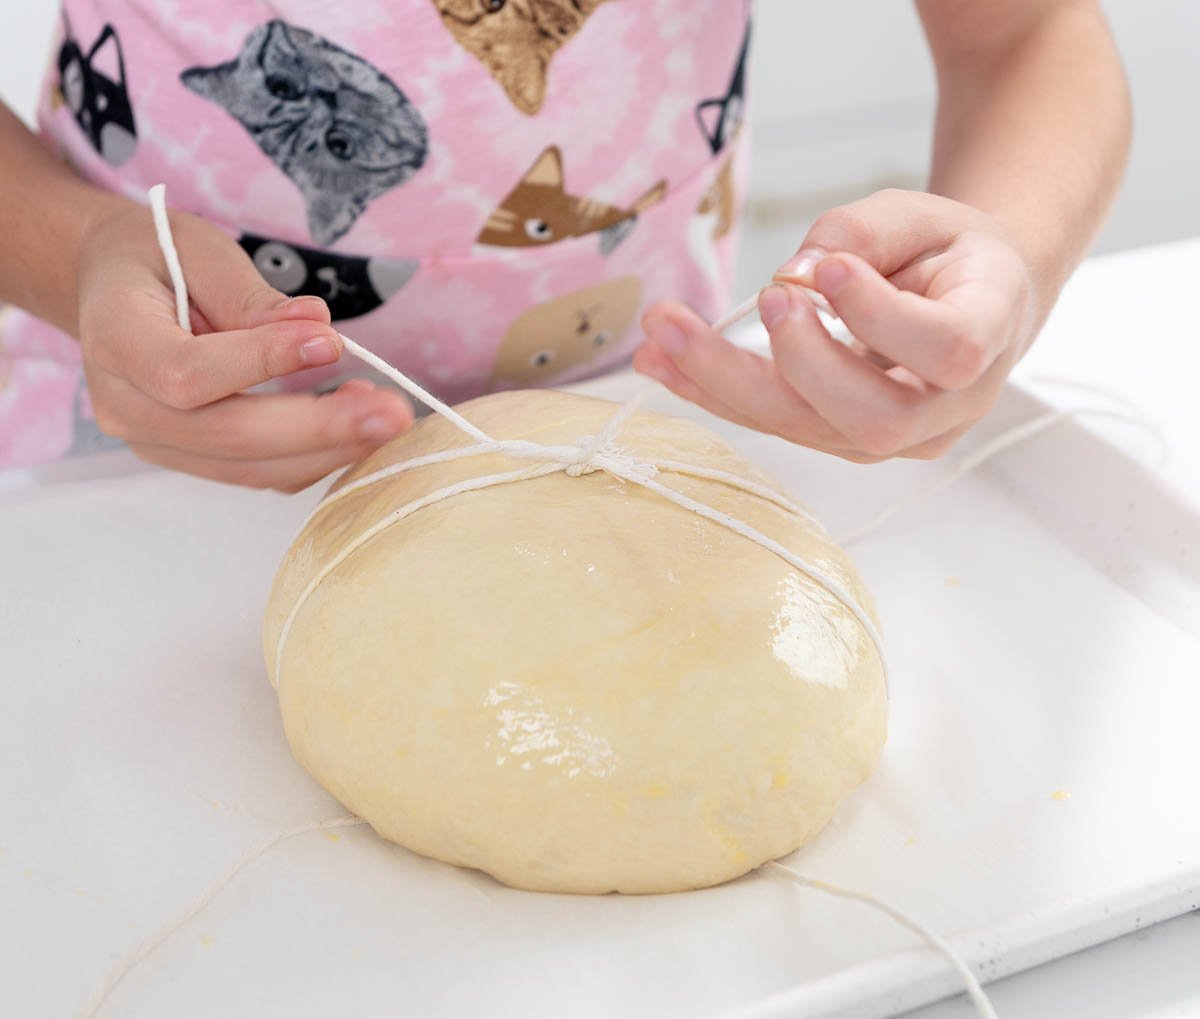 tying bakers twine around bread dough